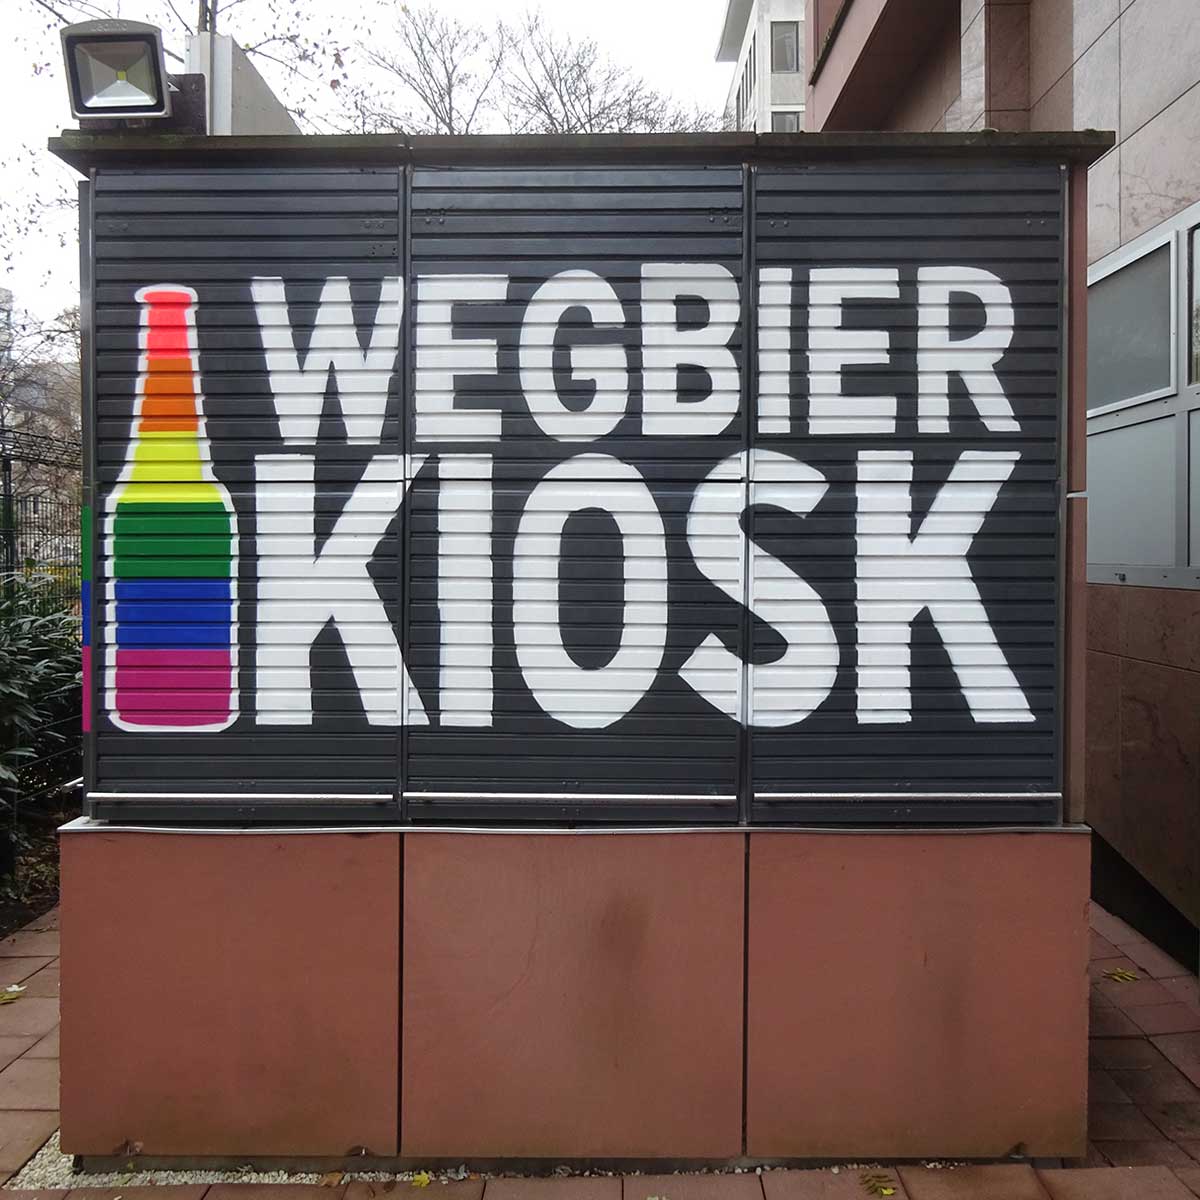 Stadtbilder Frankfurt - Wegbier Kiosk